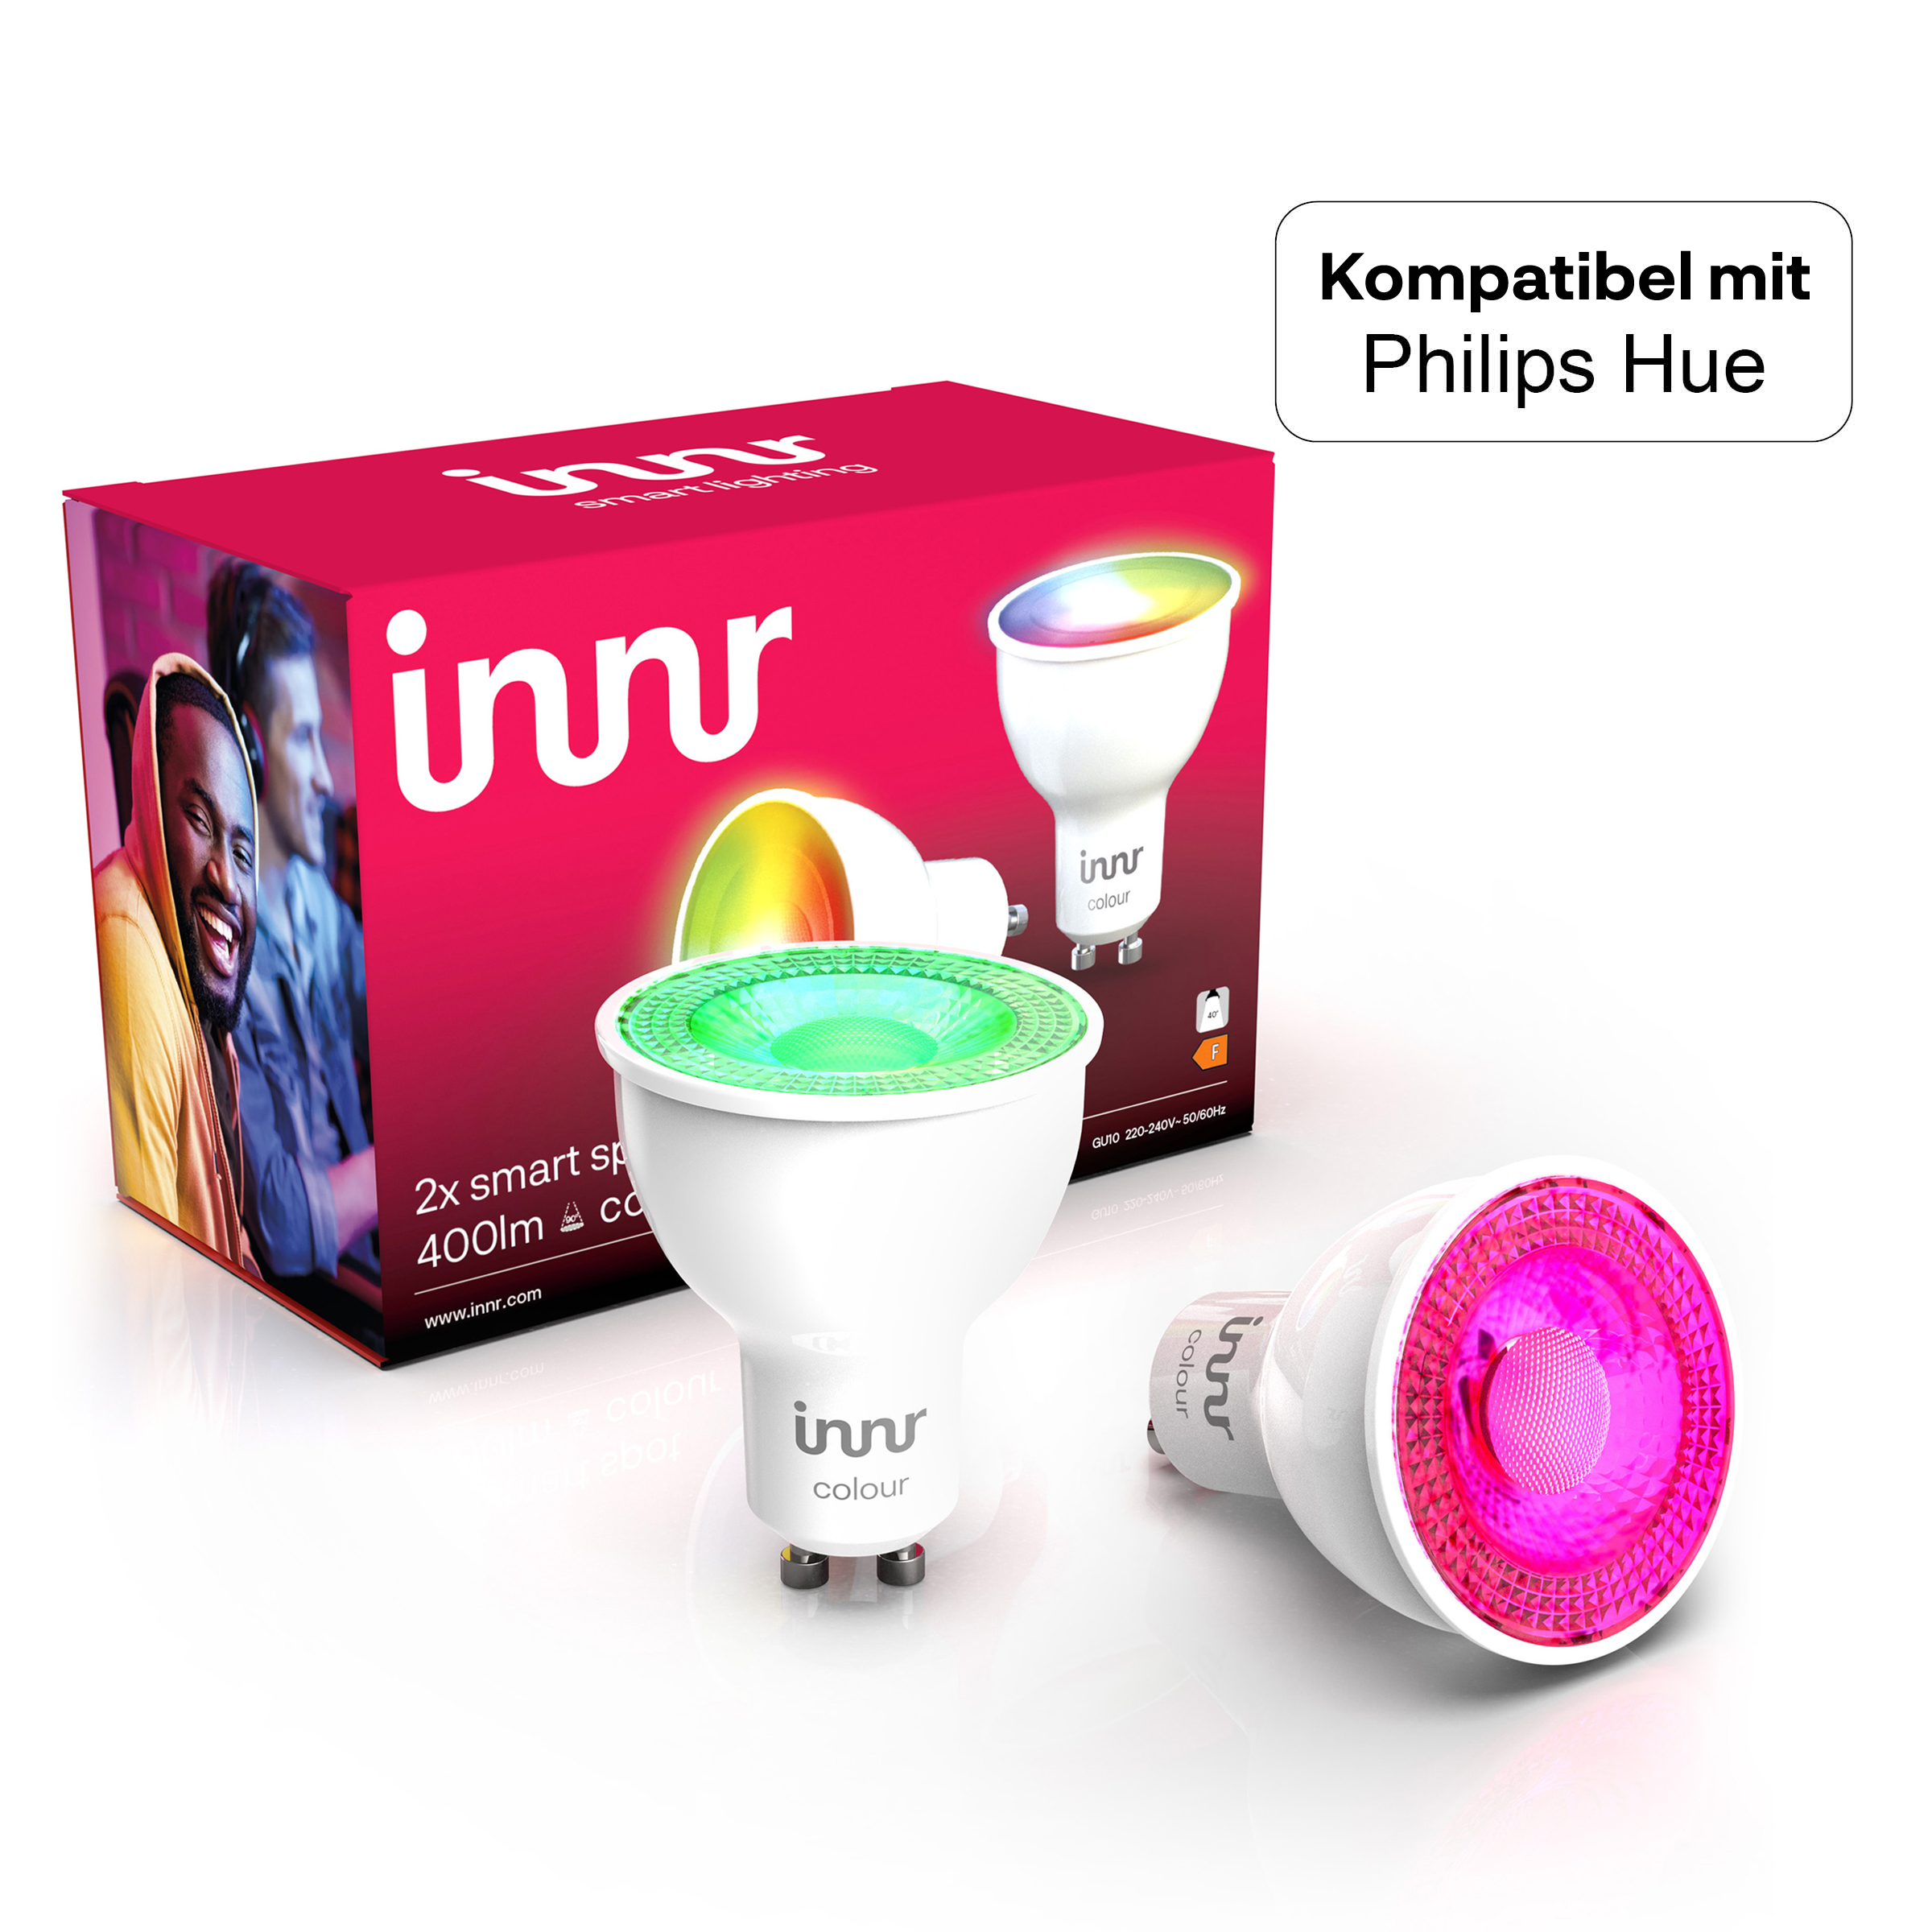 INNR Zigbee white, 232 LED white, Lampe warm GU10 mit multicoloured, neutral Smart cold 2-pack, Alexa, LED, white Hue Philips C-2 RGBW, & Kompatibel RS